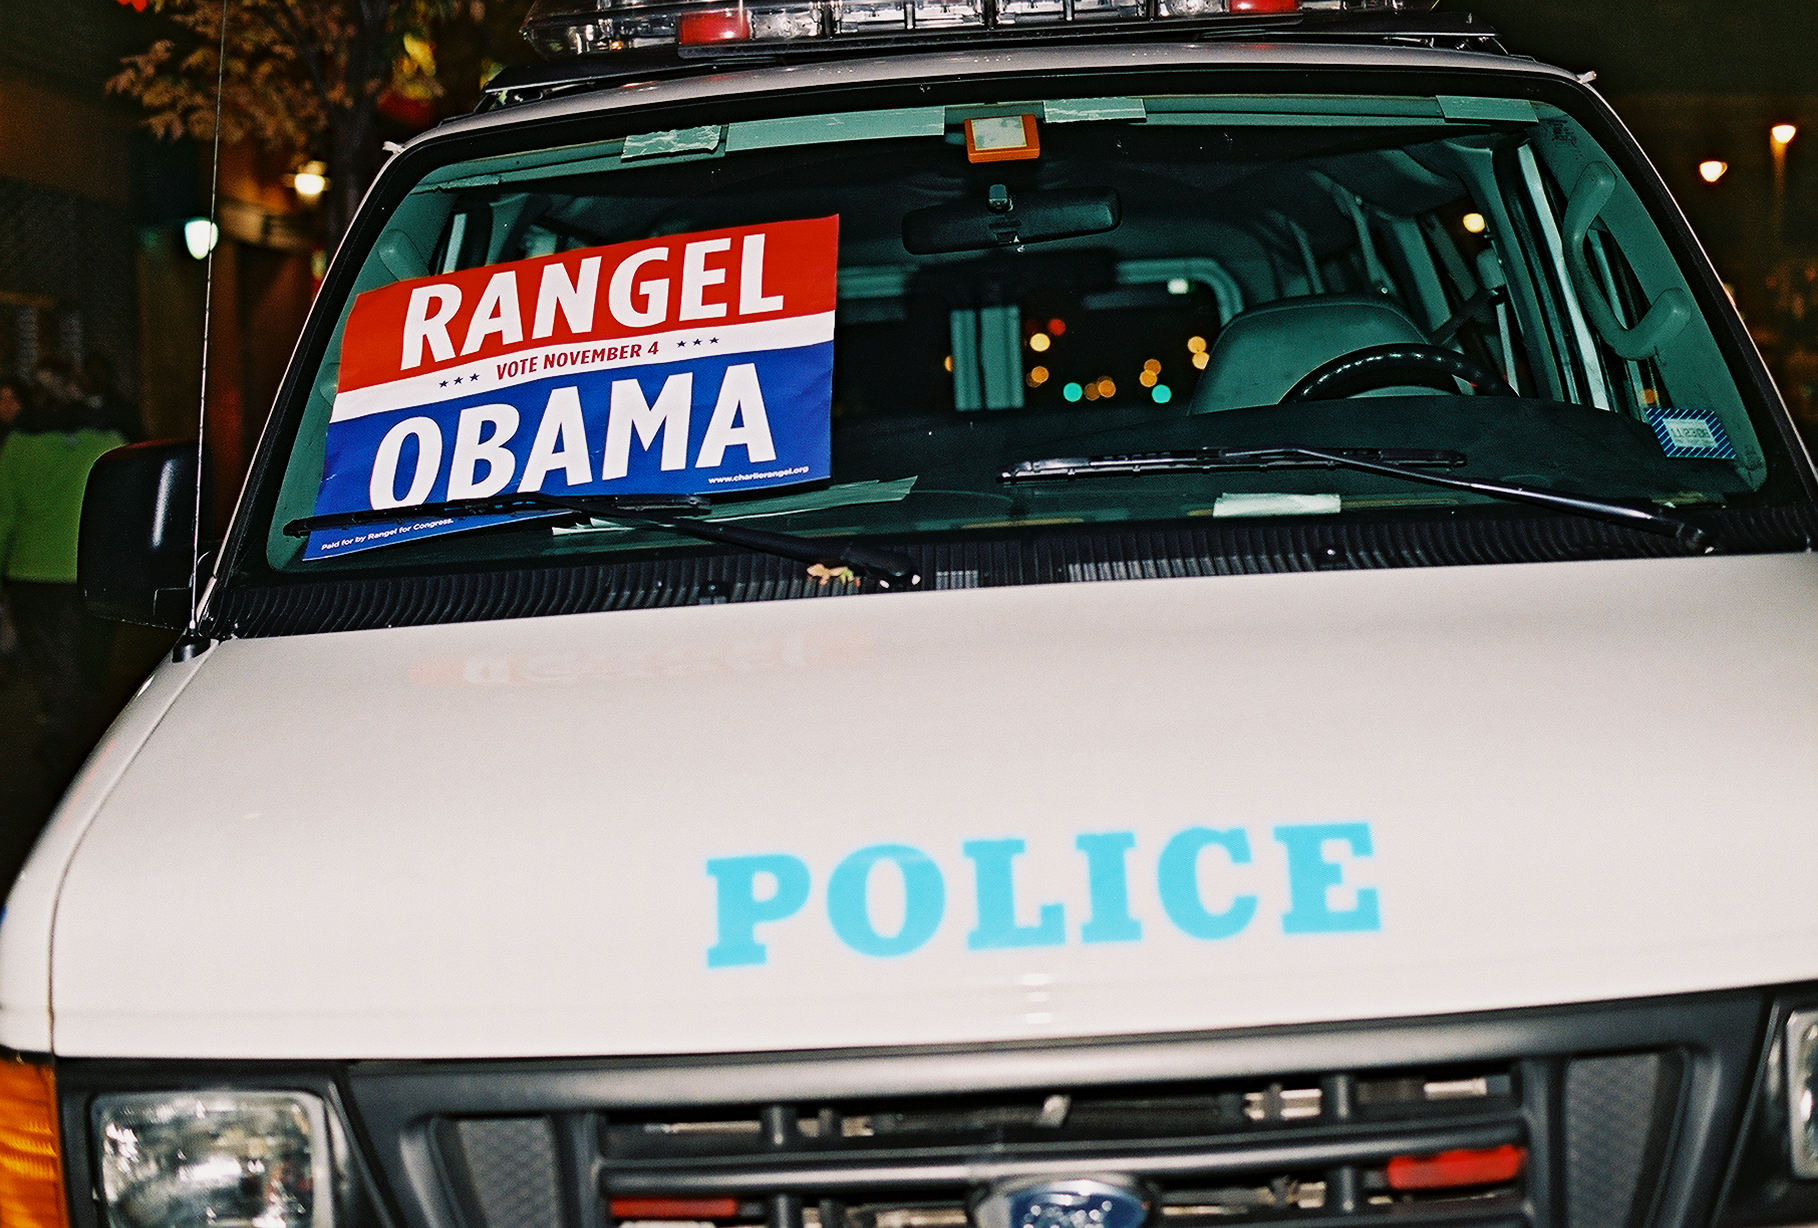 Harlem Police Obama.jpg